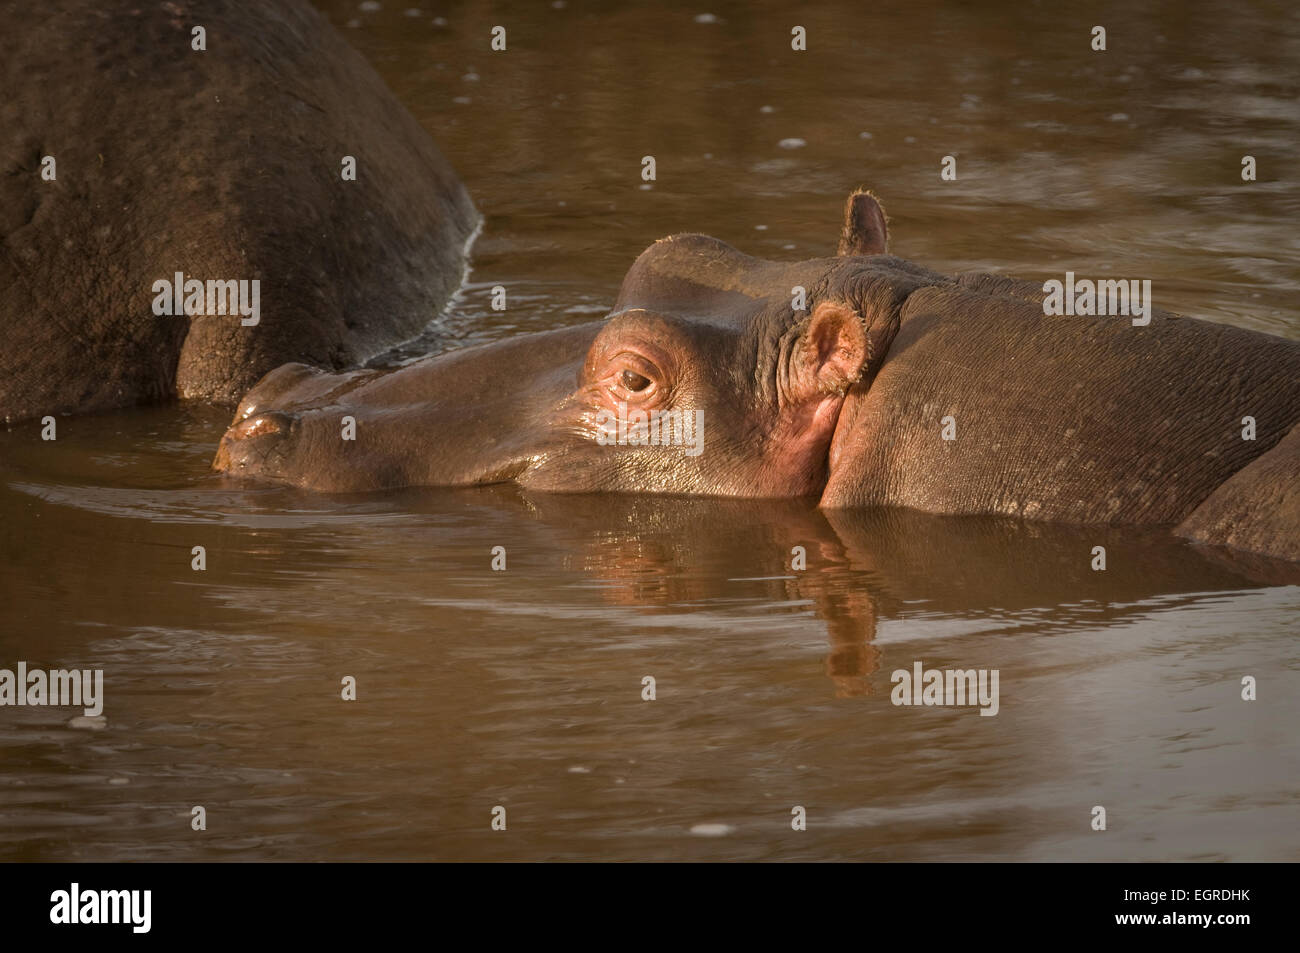 Head shot of hippopotamus in water Stock Photo